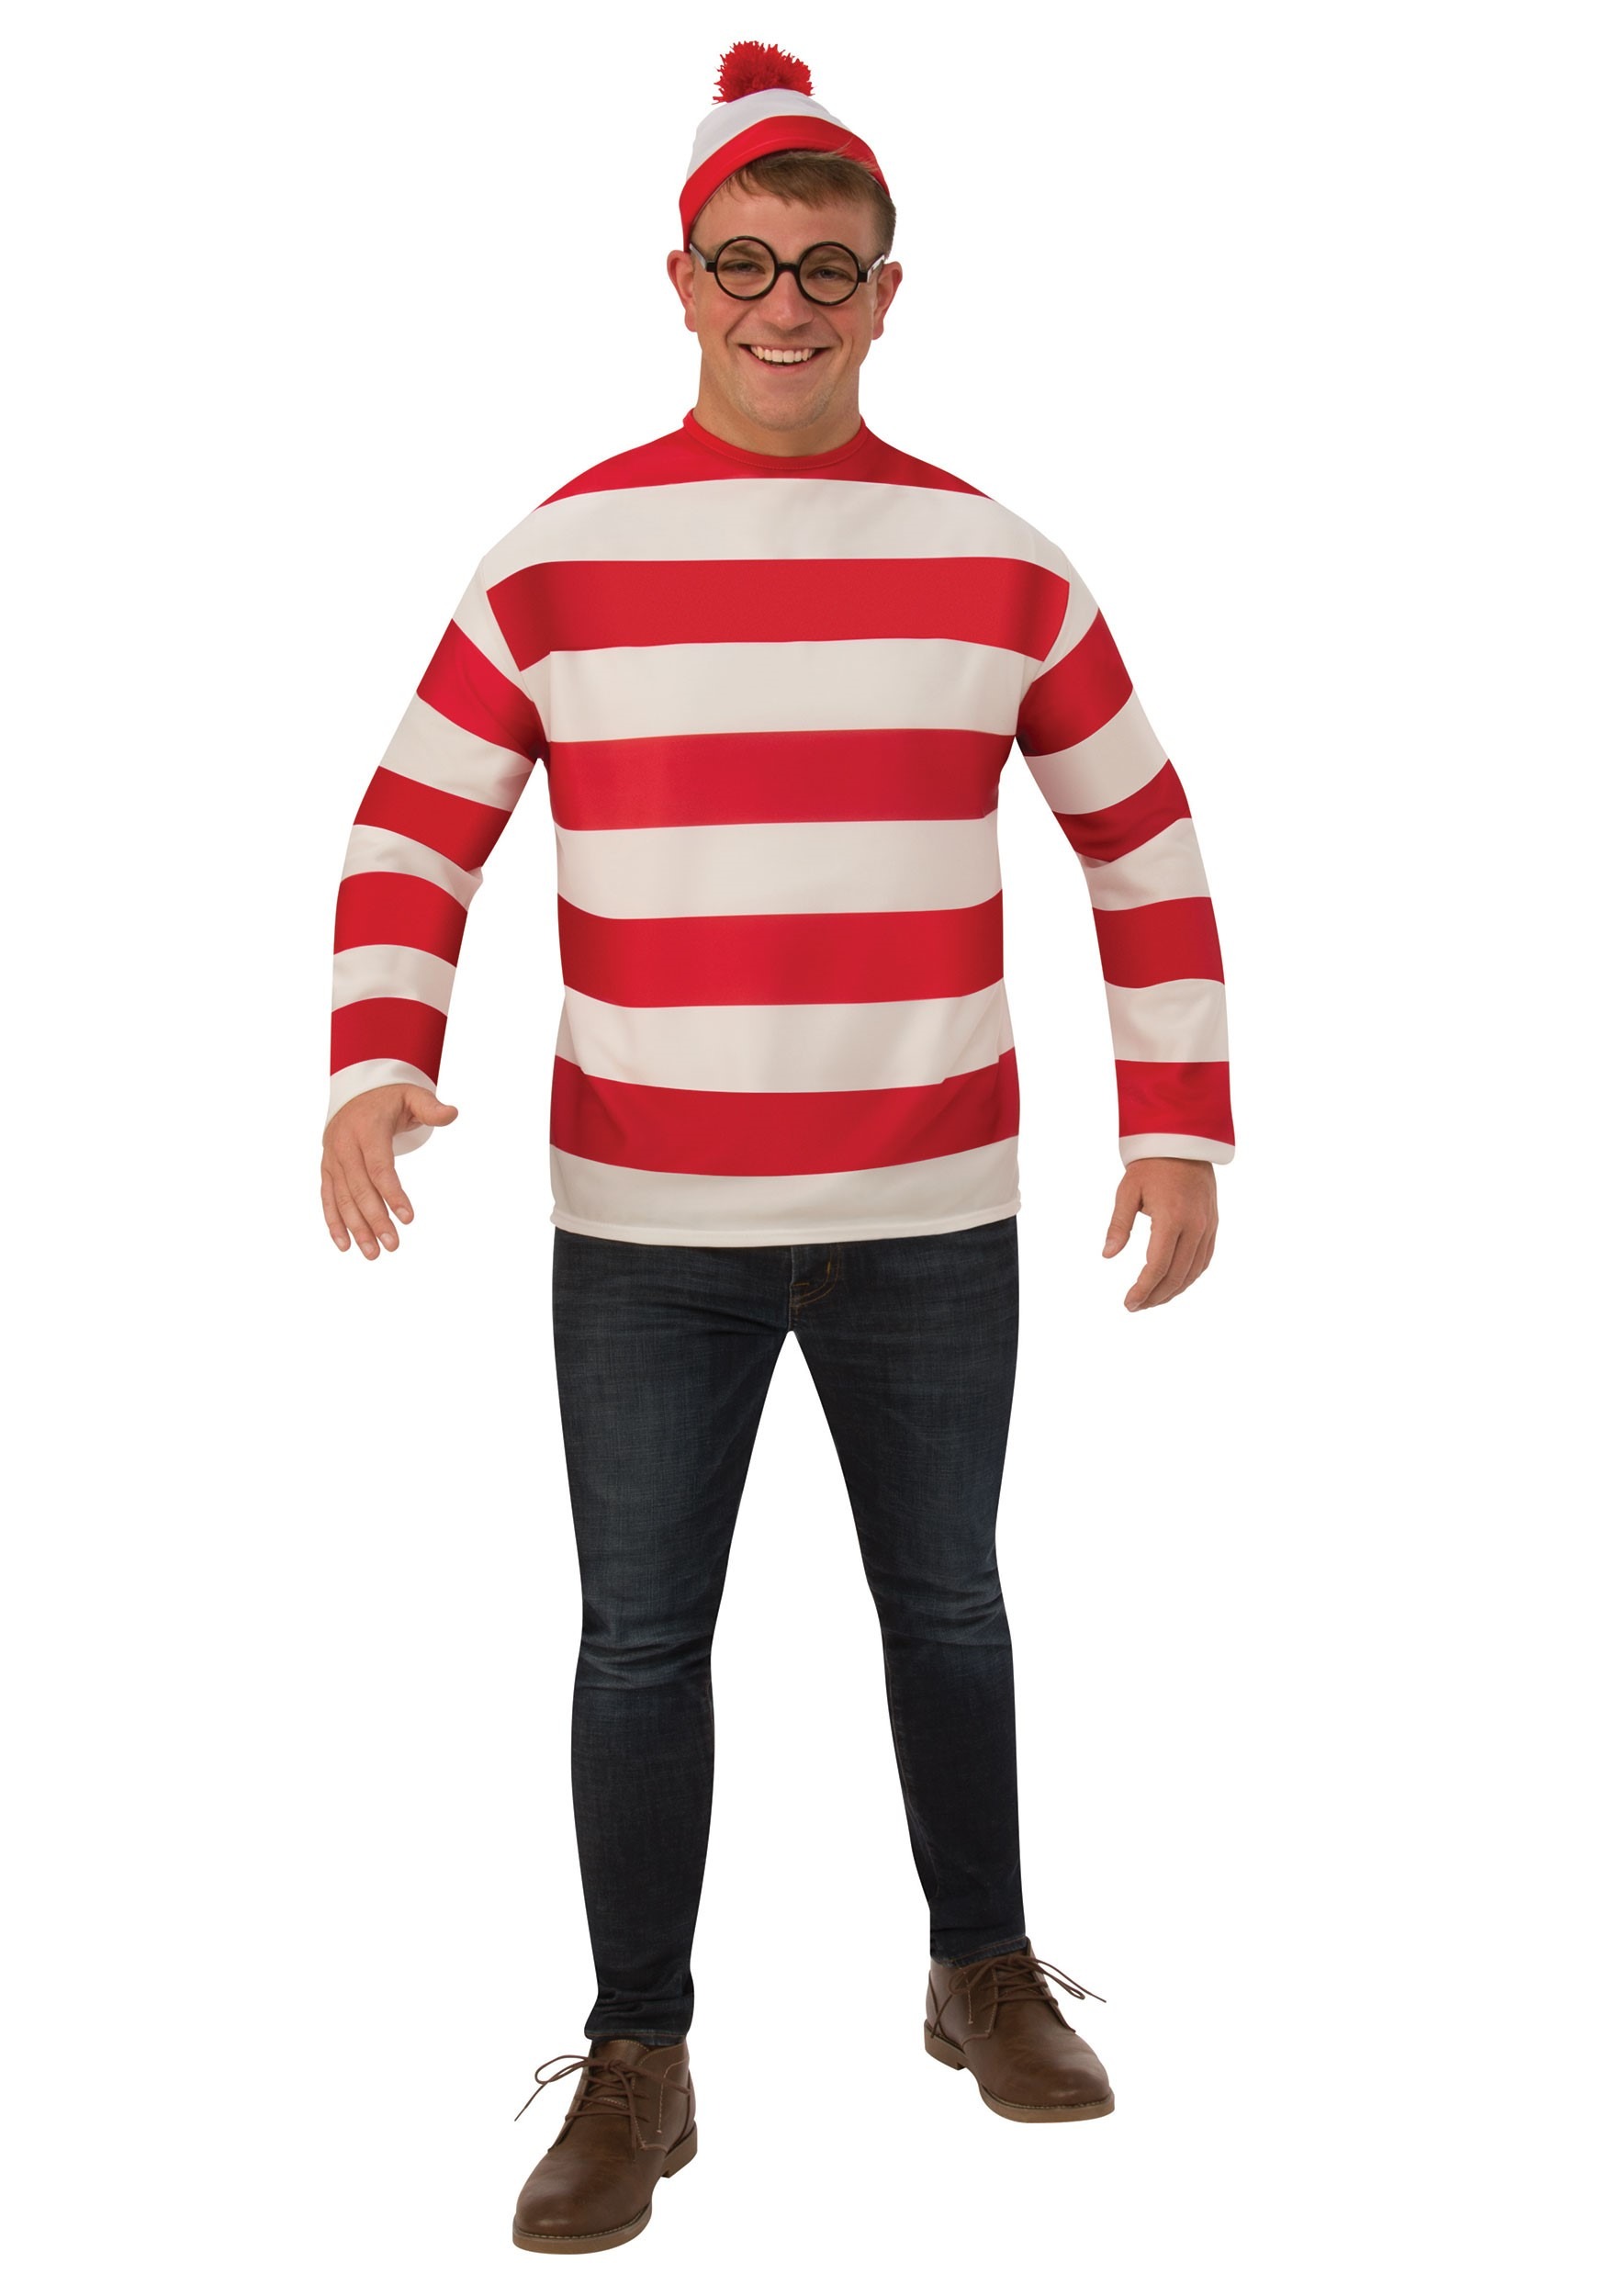 Where's Waldo: Plus Size Adult Costume